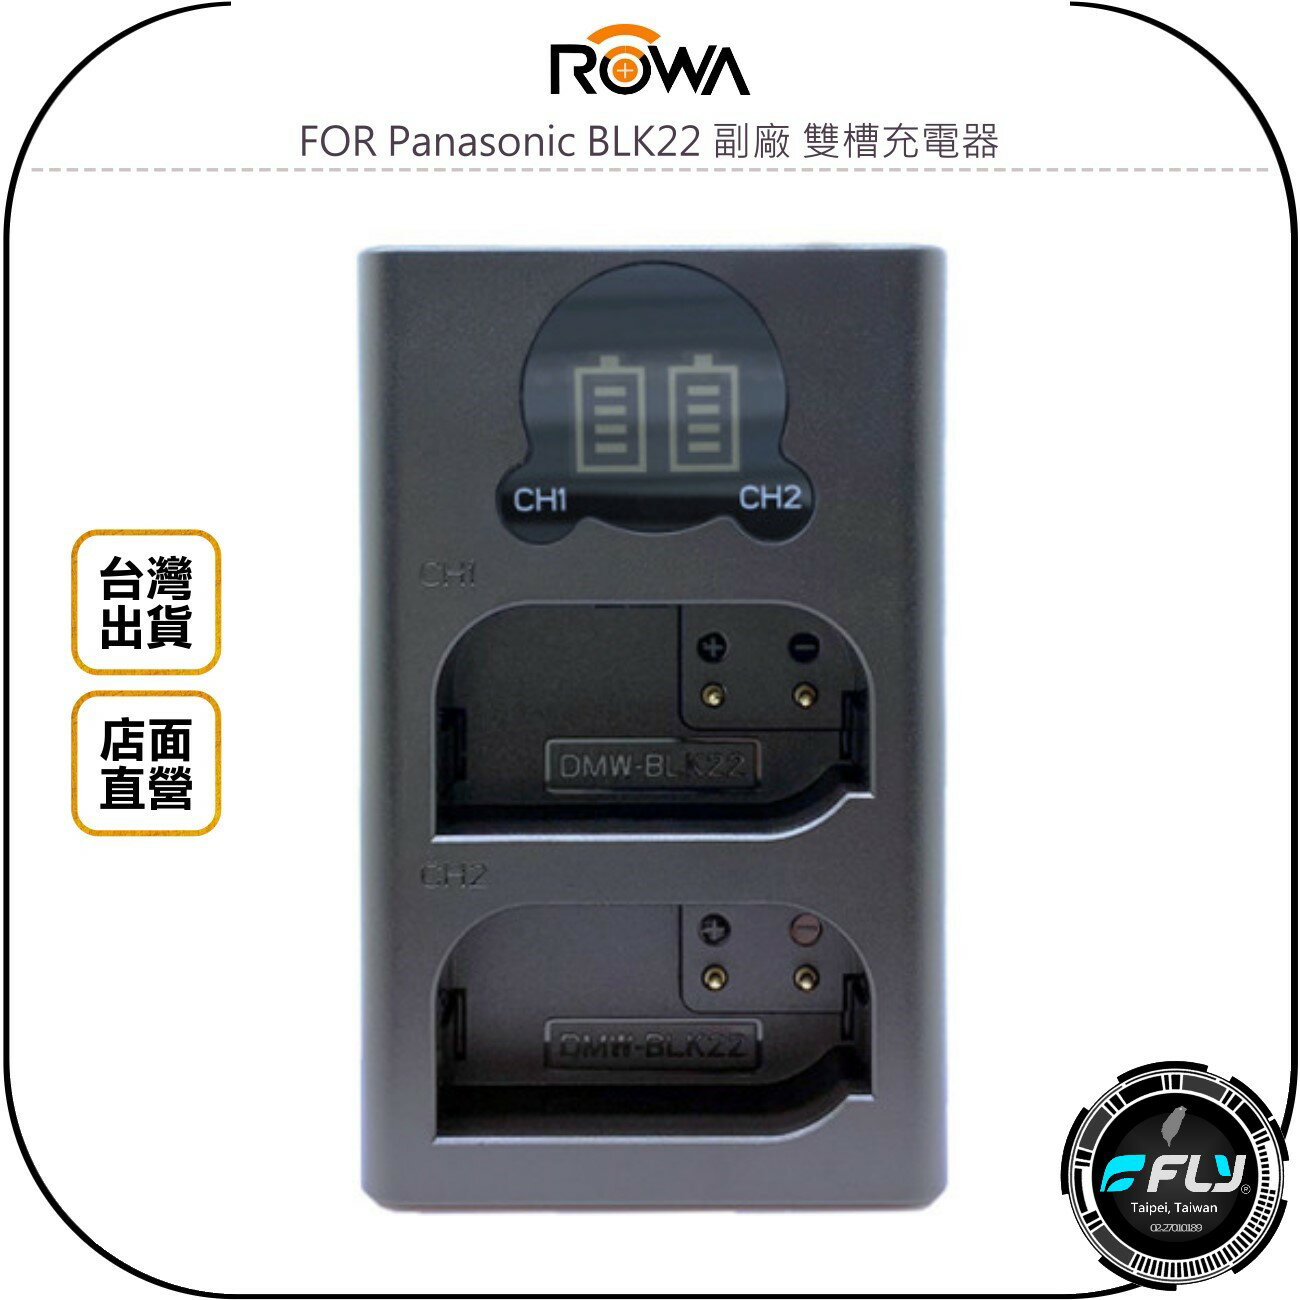 《飛翔無線3C》ROWA FOR Panasonic BLK22 副廠 雙槽充電器◉LCD顯示◉TYPE-C充電孔